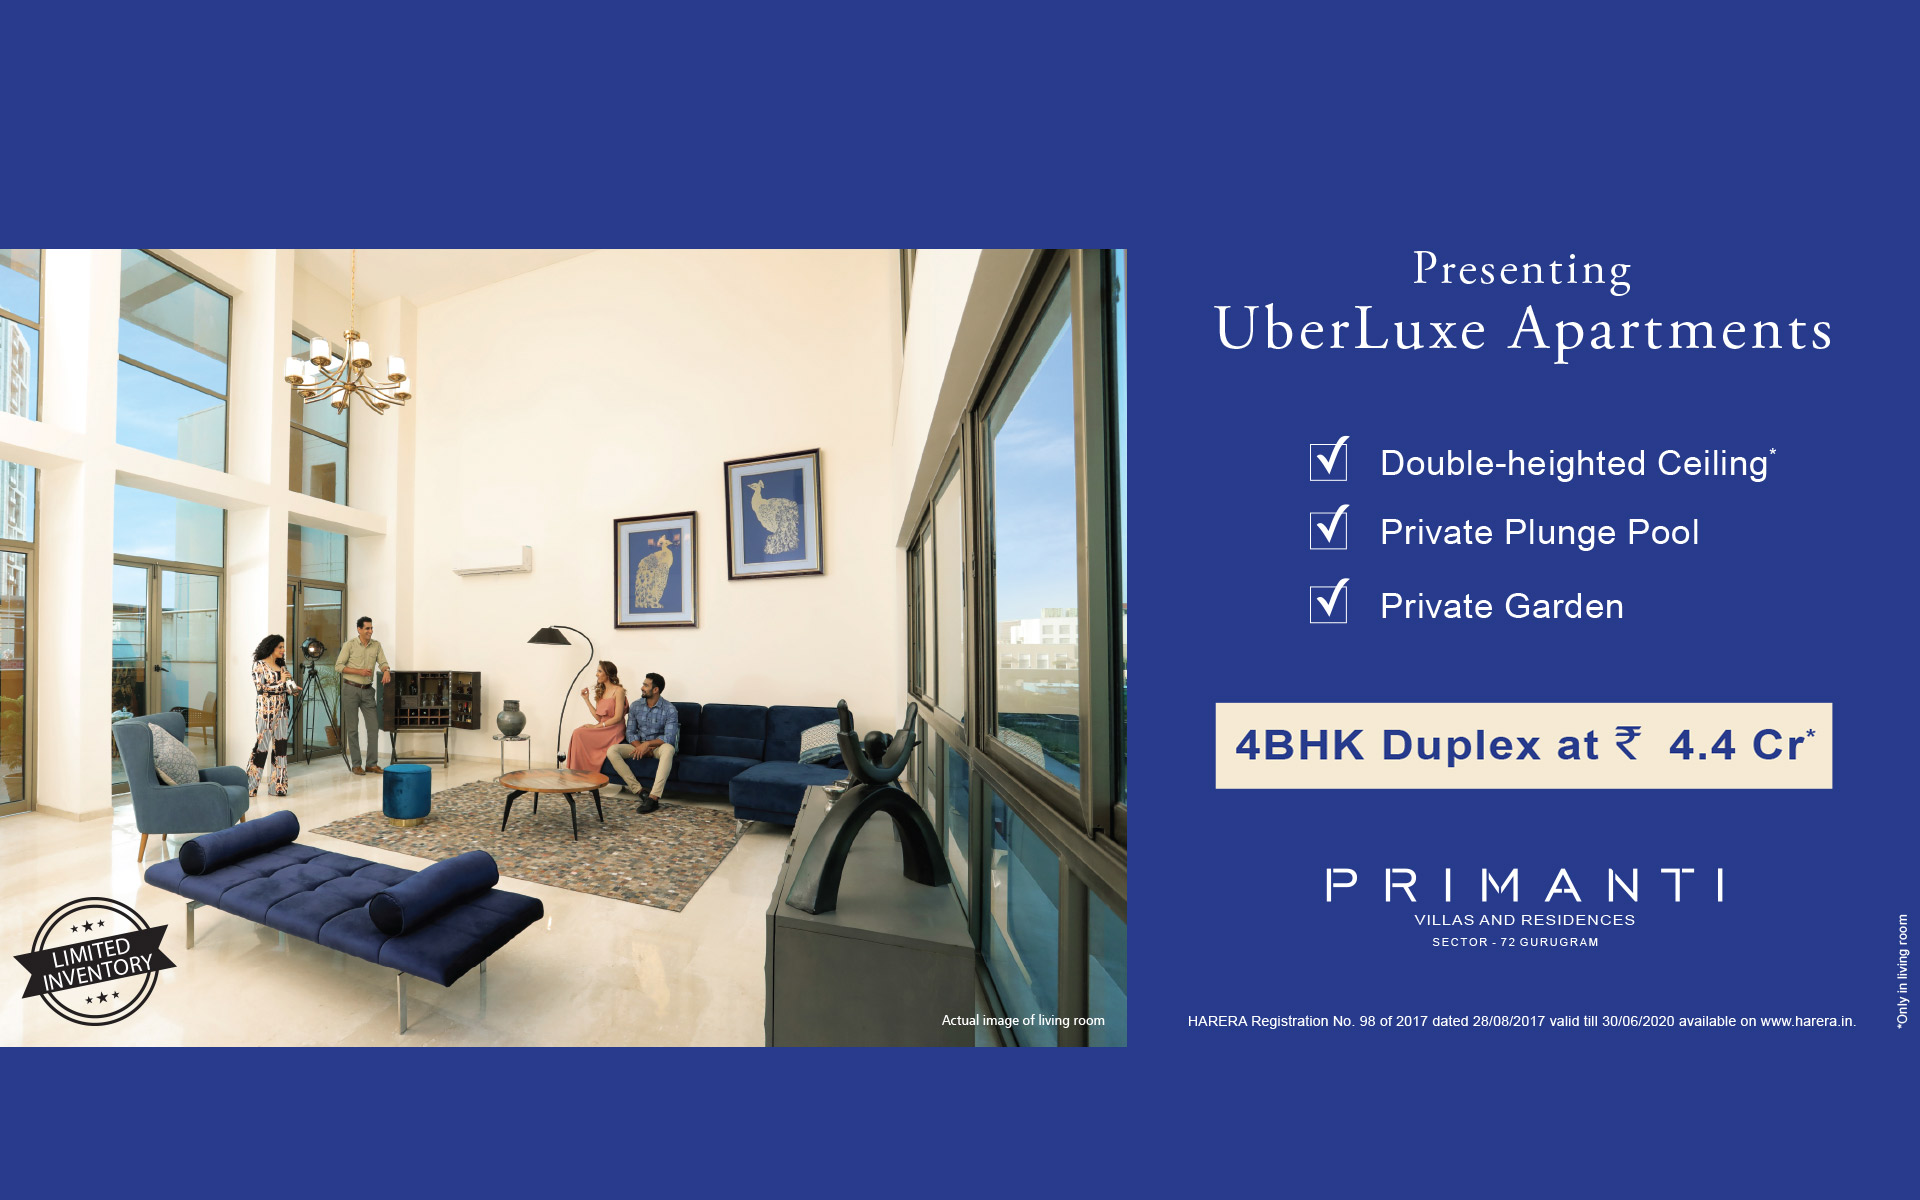 Presenting uber-luxe 4 bhk duplex at Rs. 4.4 Cr. at TATA Primanti in Gurgaon